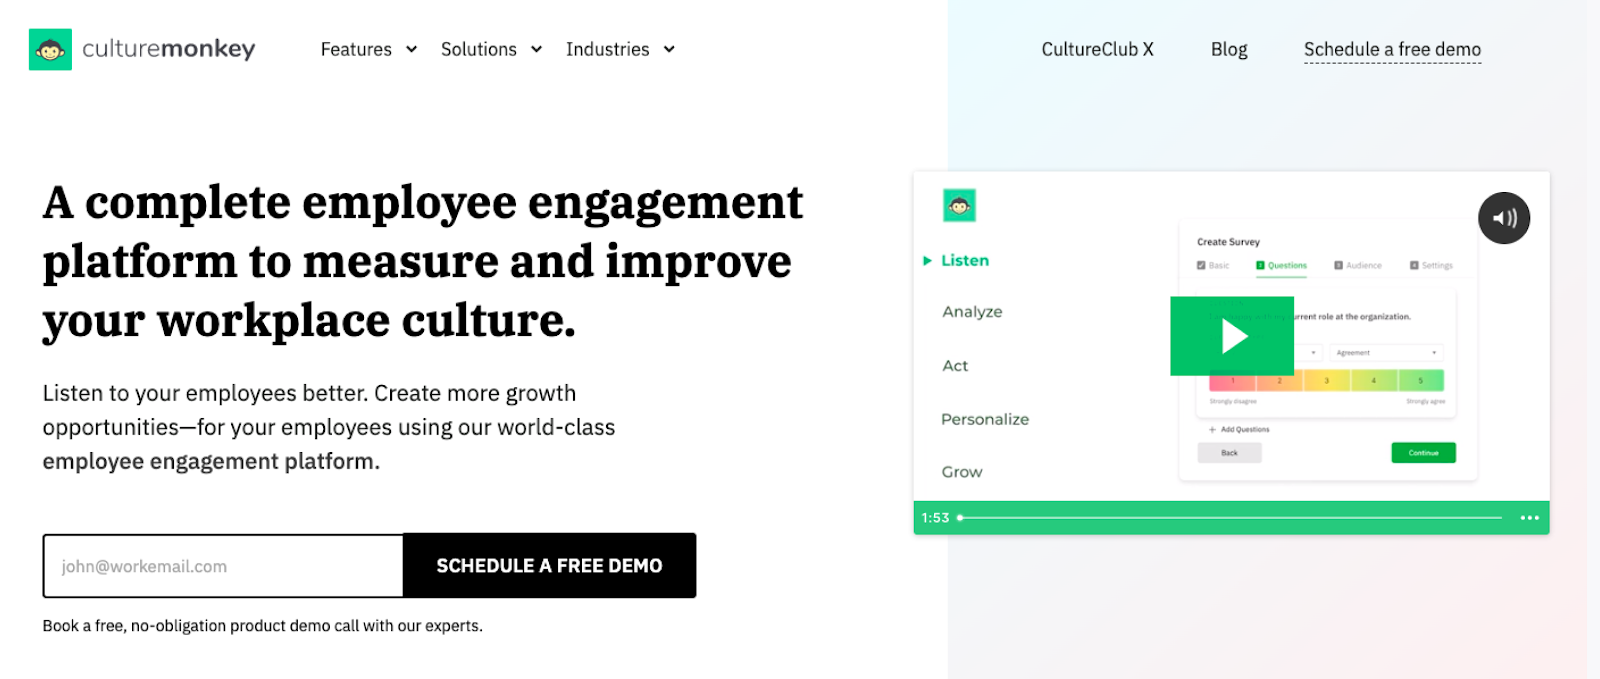 CultureMonkey's Employee Engagment Platform. 